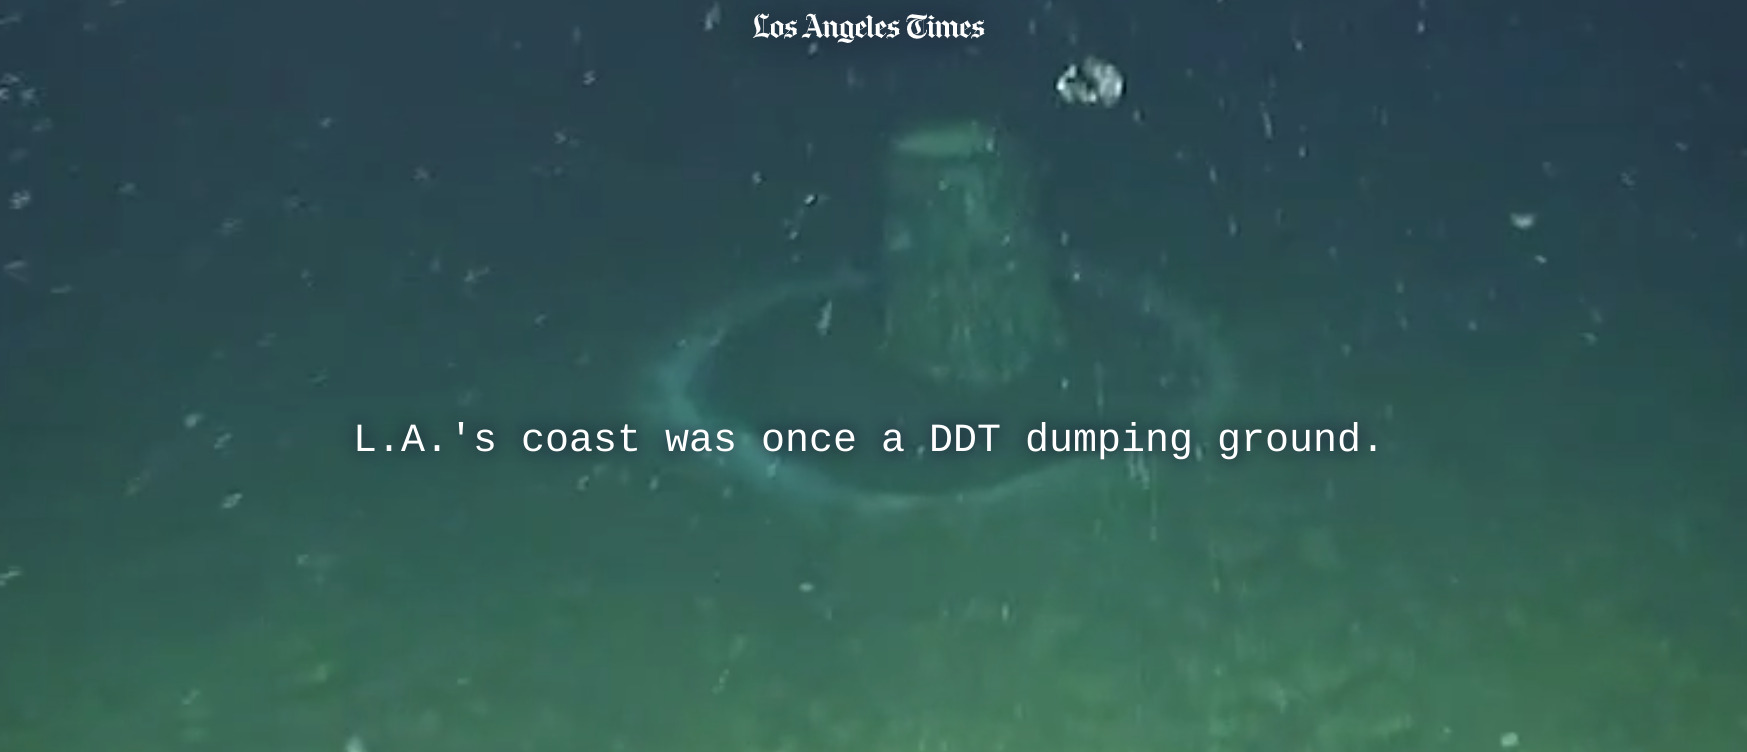 DDT Dumping near Catalina